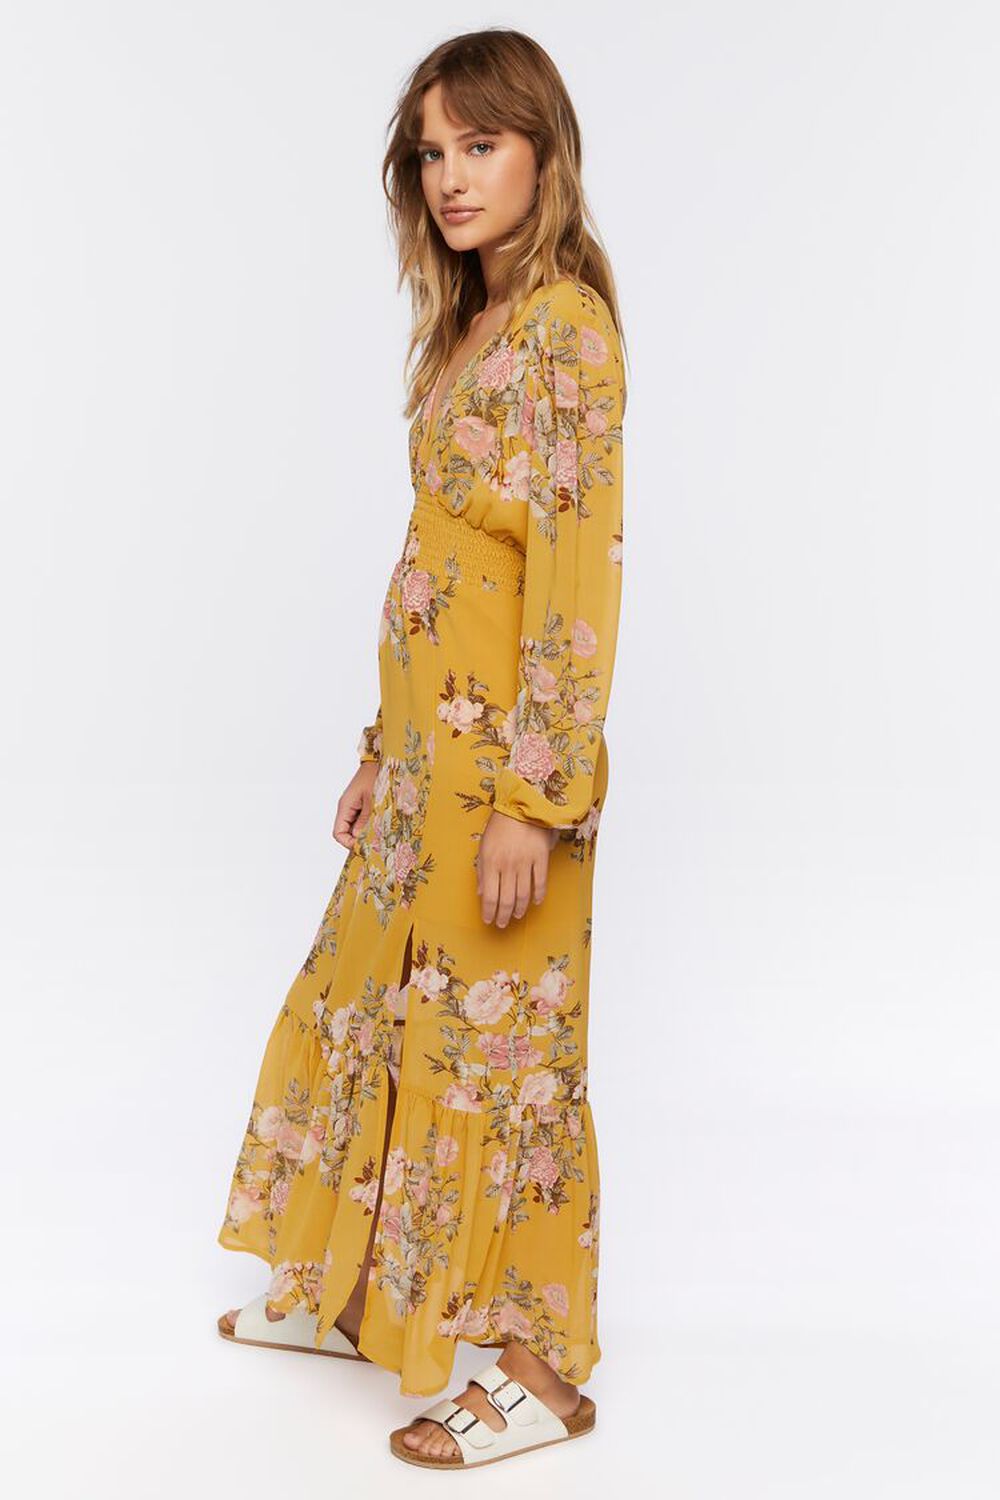 MUSTARD/MULTI Plunging Floral Print Maxi Dress, image 2